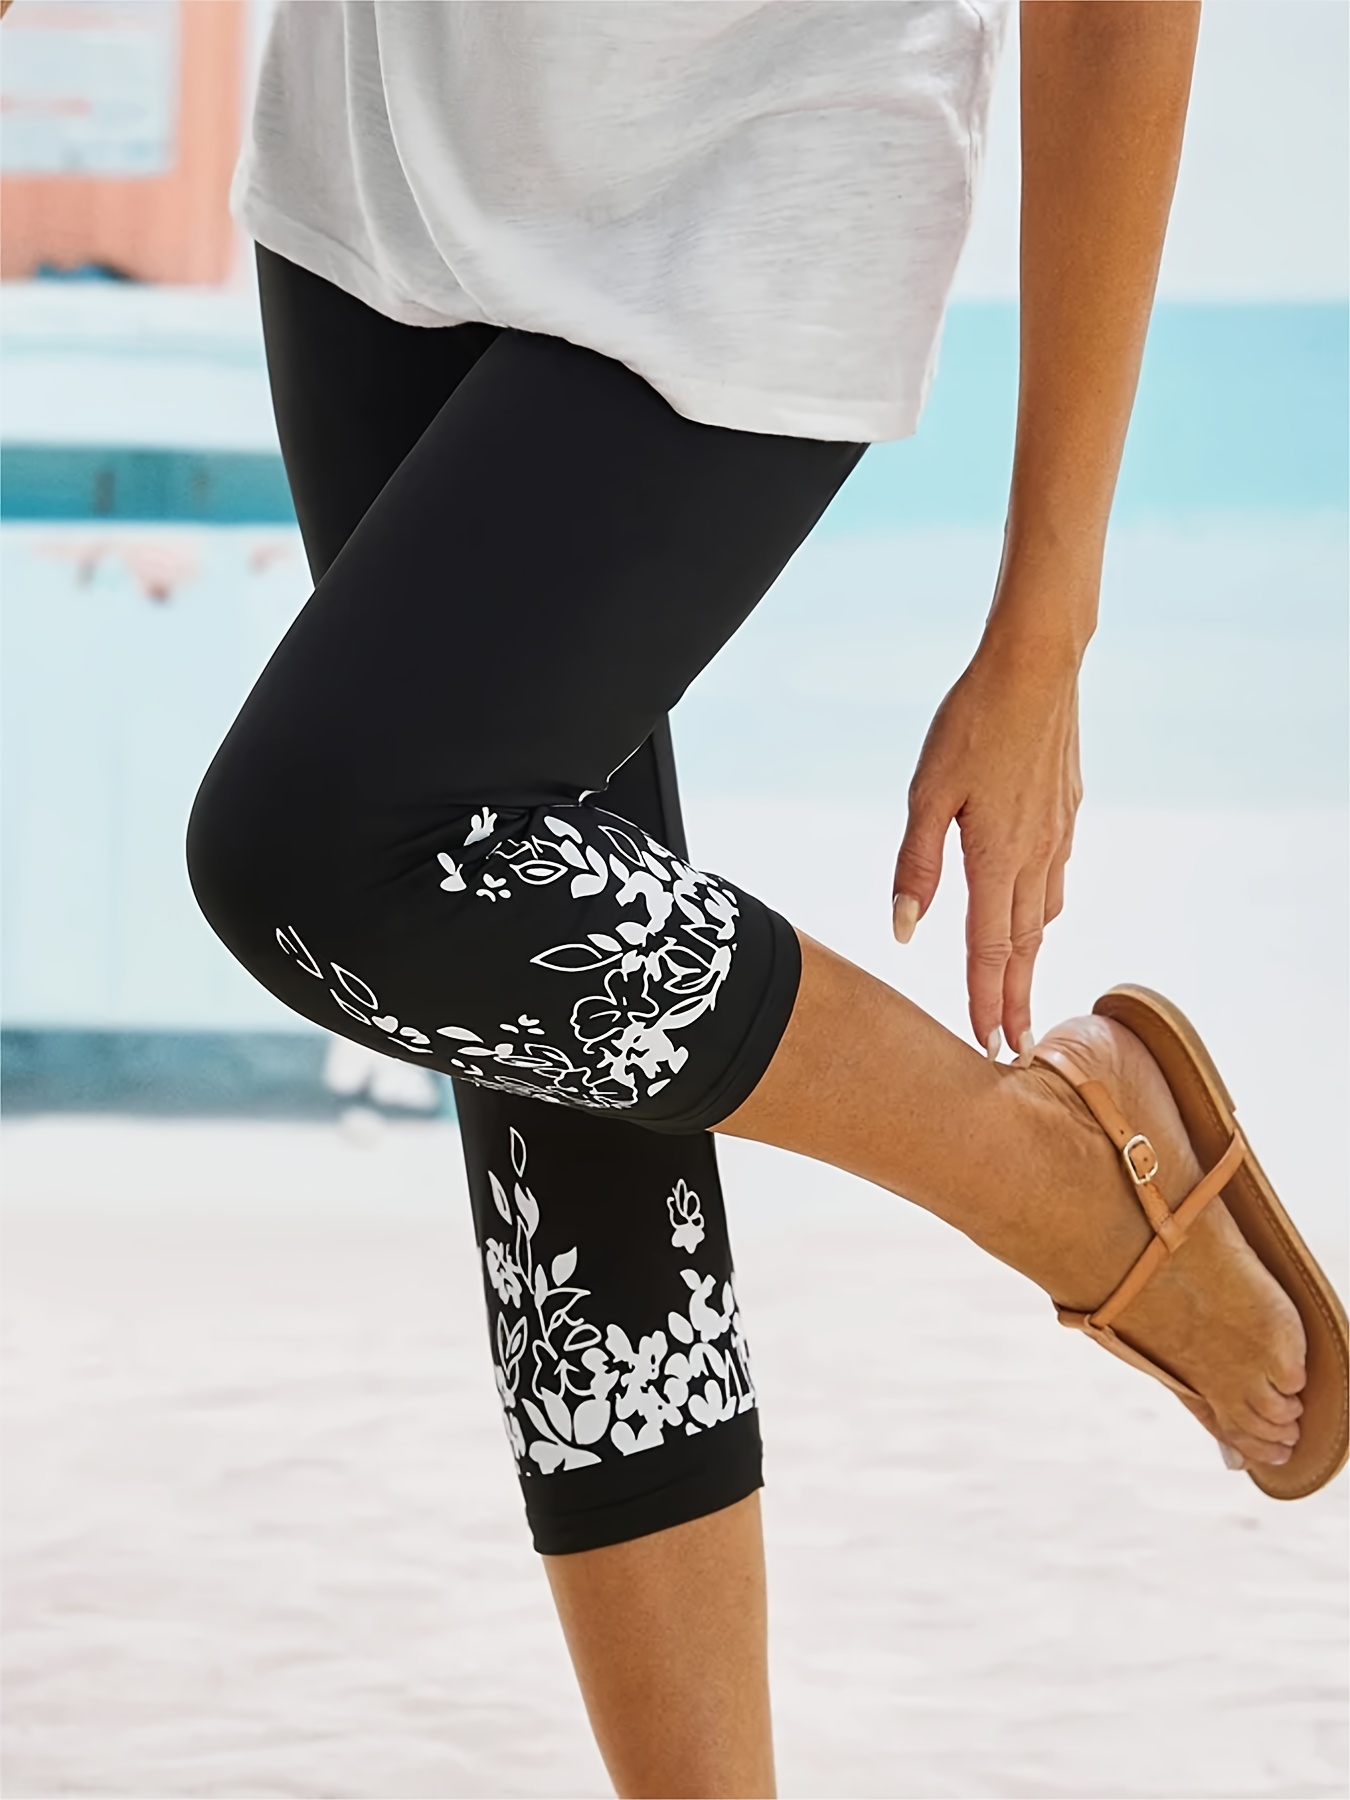 New APANA Floral Print High Waist Women's S Small Capri Leggings Yoga Pants